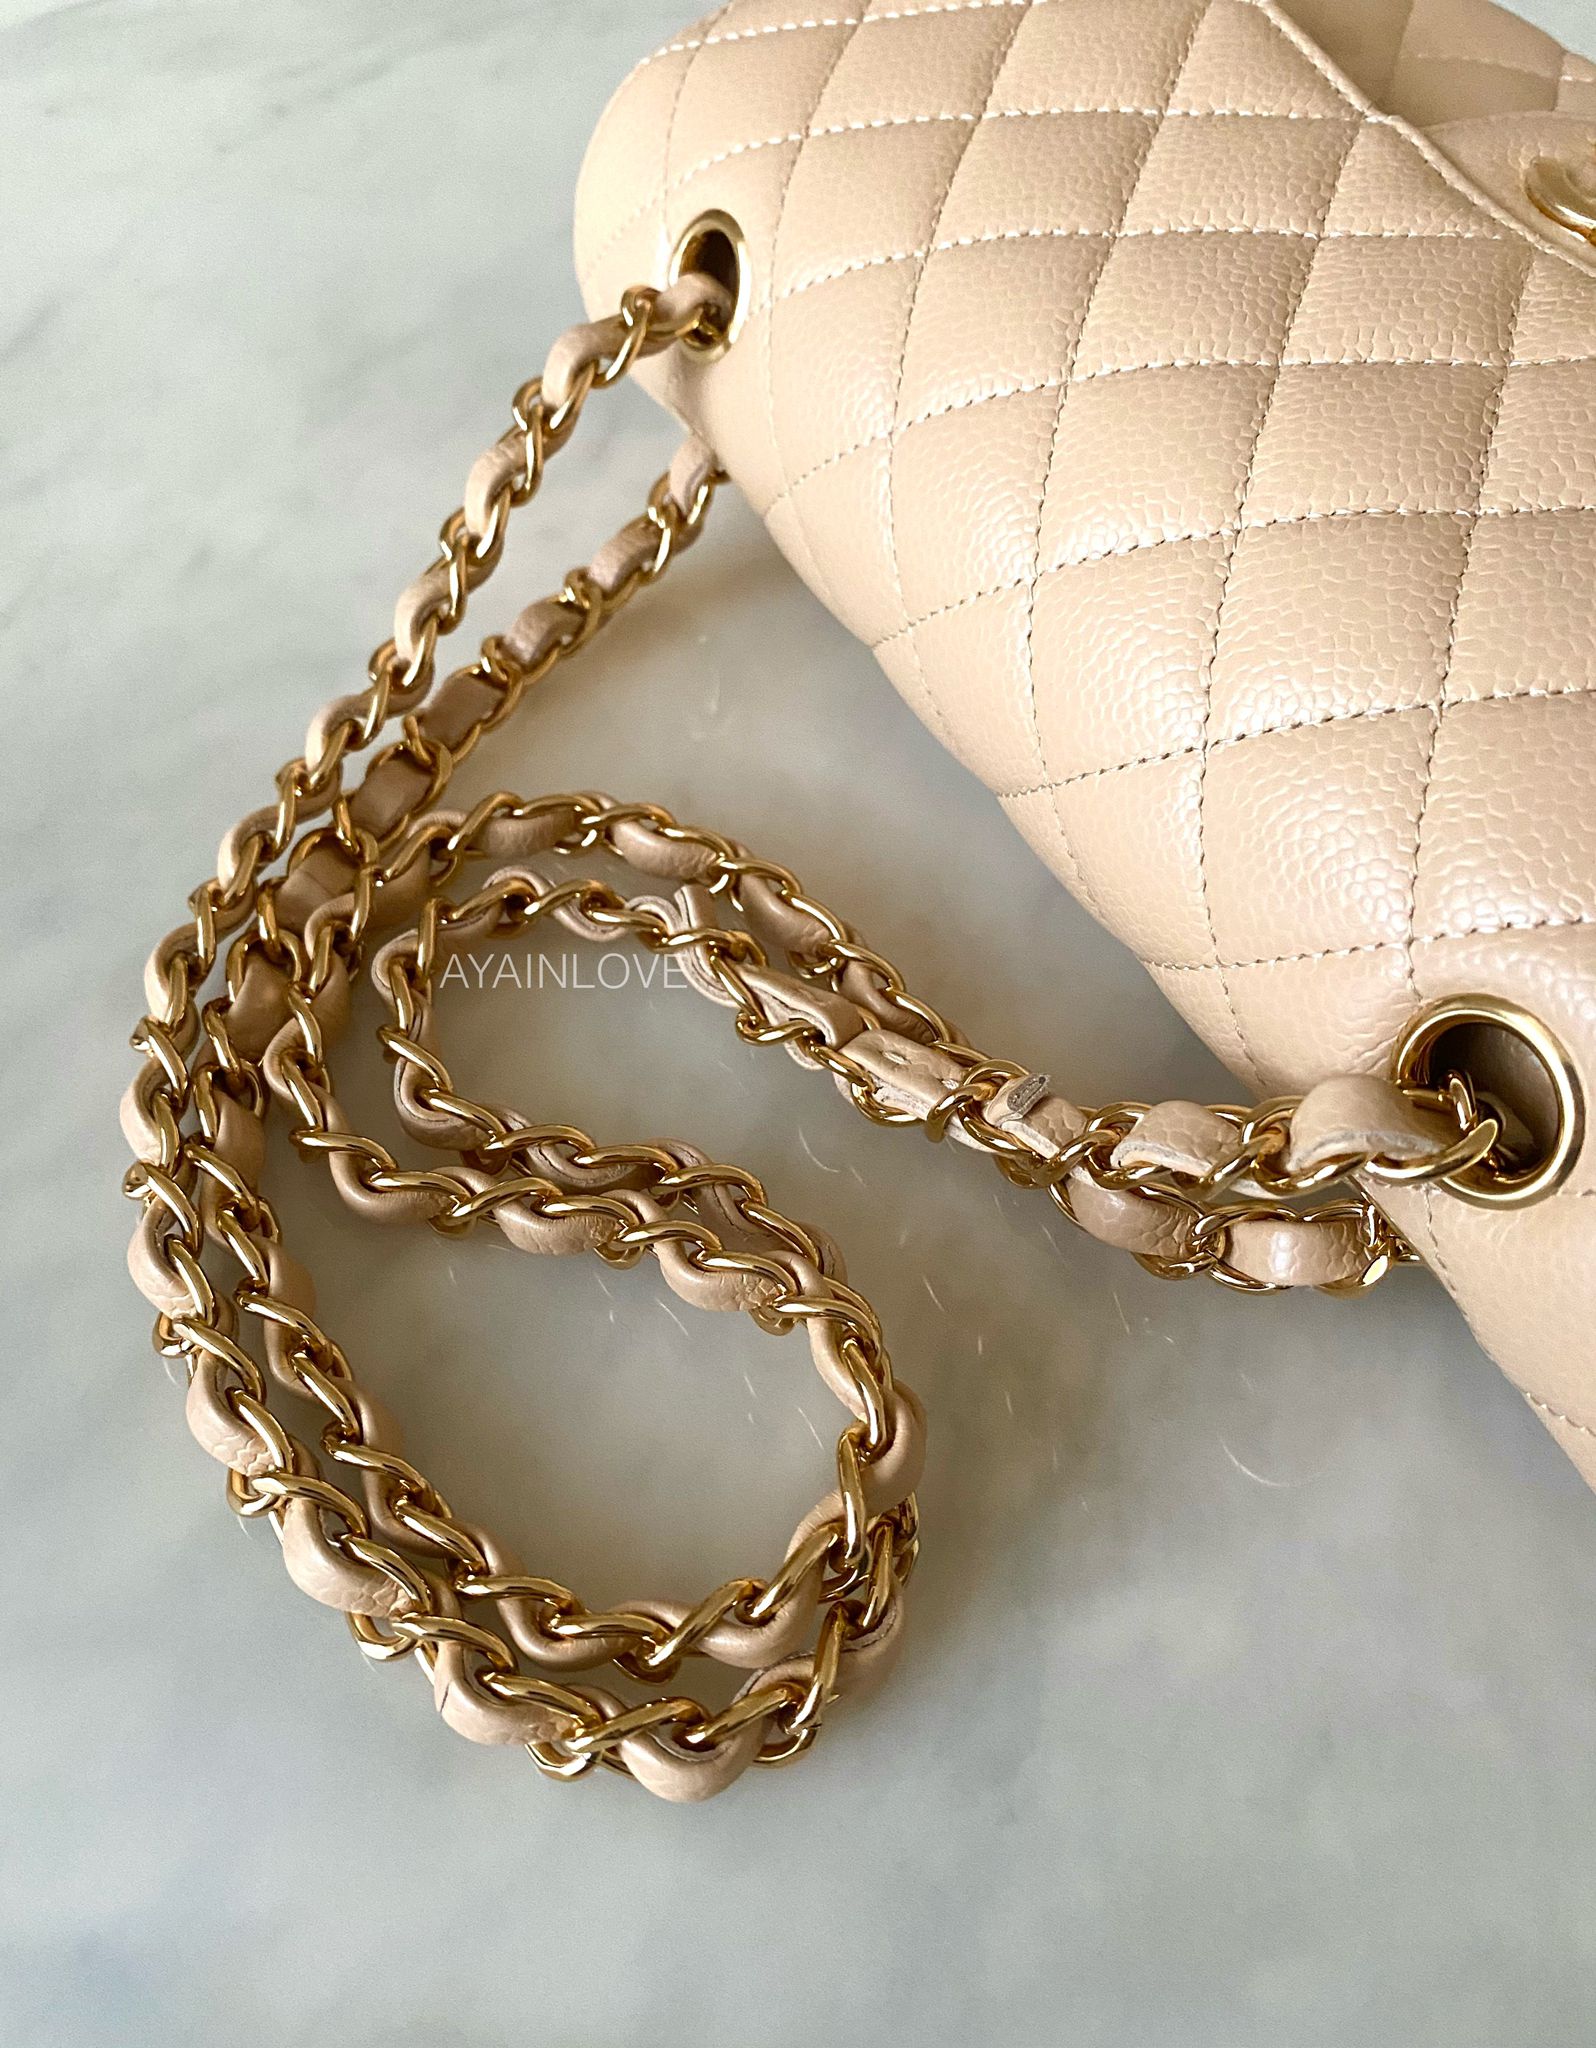 Chanel Jumbo & medium classic flap beige gold, silver, caviar